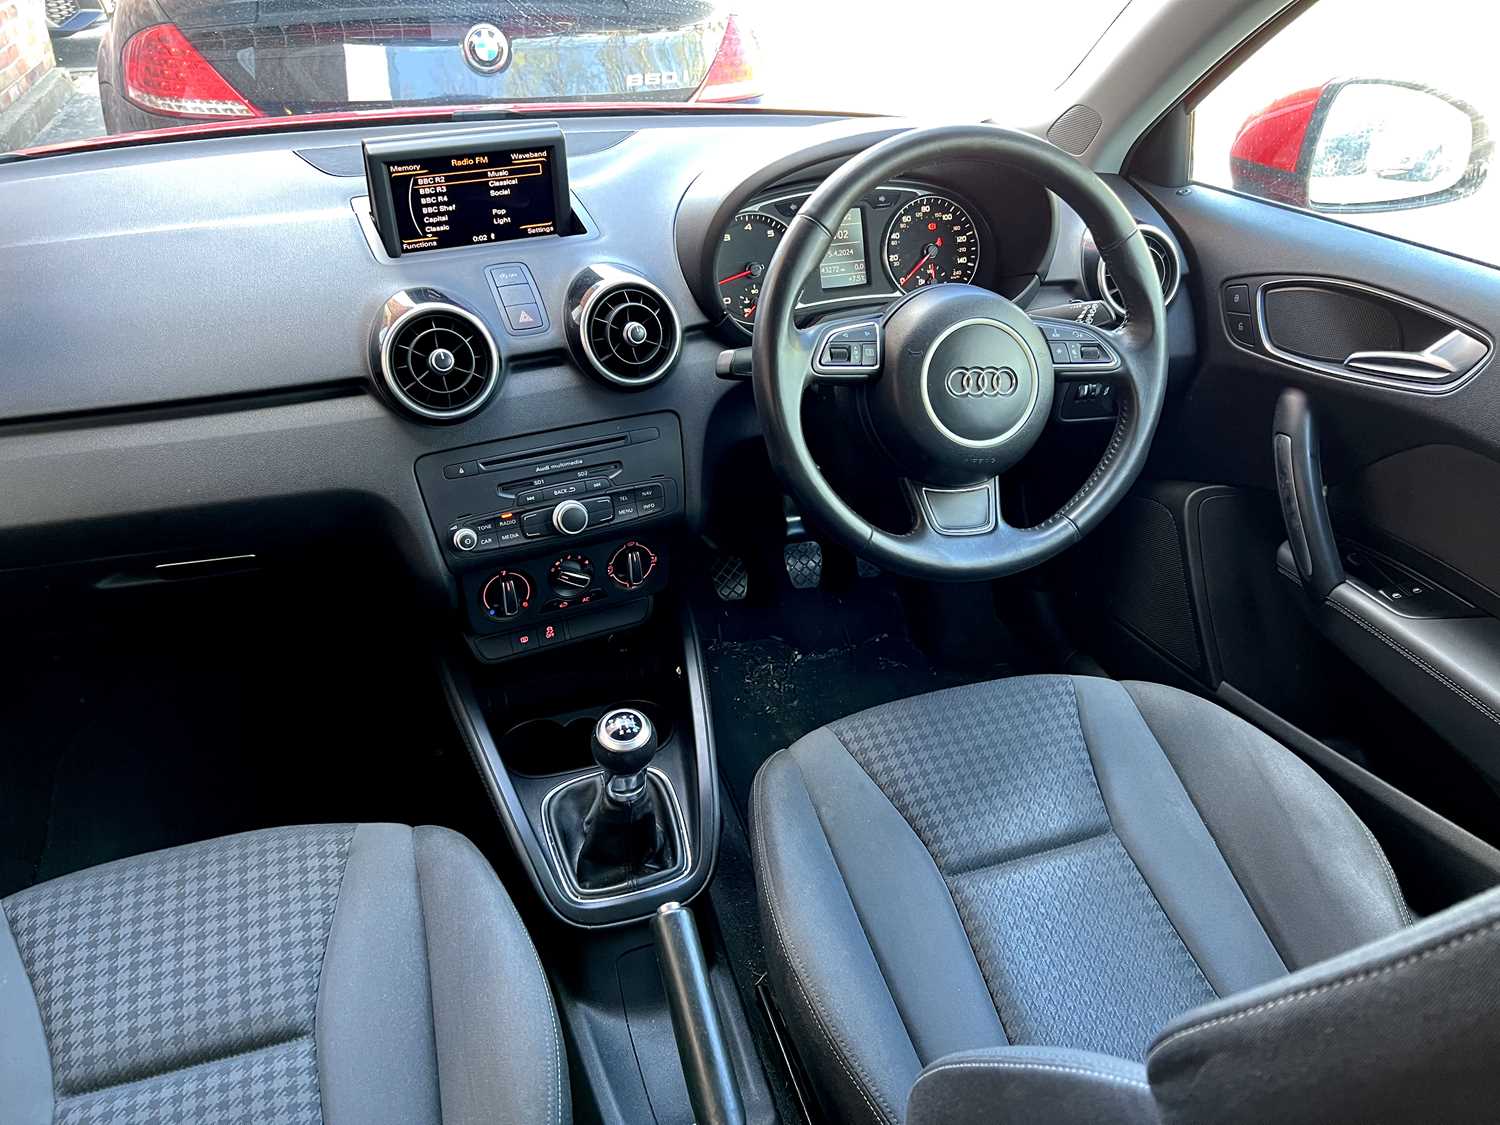 2011 [YR11 HDE] Audi A1 1.4 TFSI (petrol) Sport 3-door hatchback in red, 6-speed manual gearbox, - Bild 5 aus 7